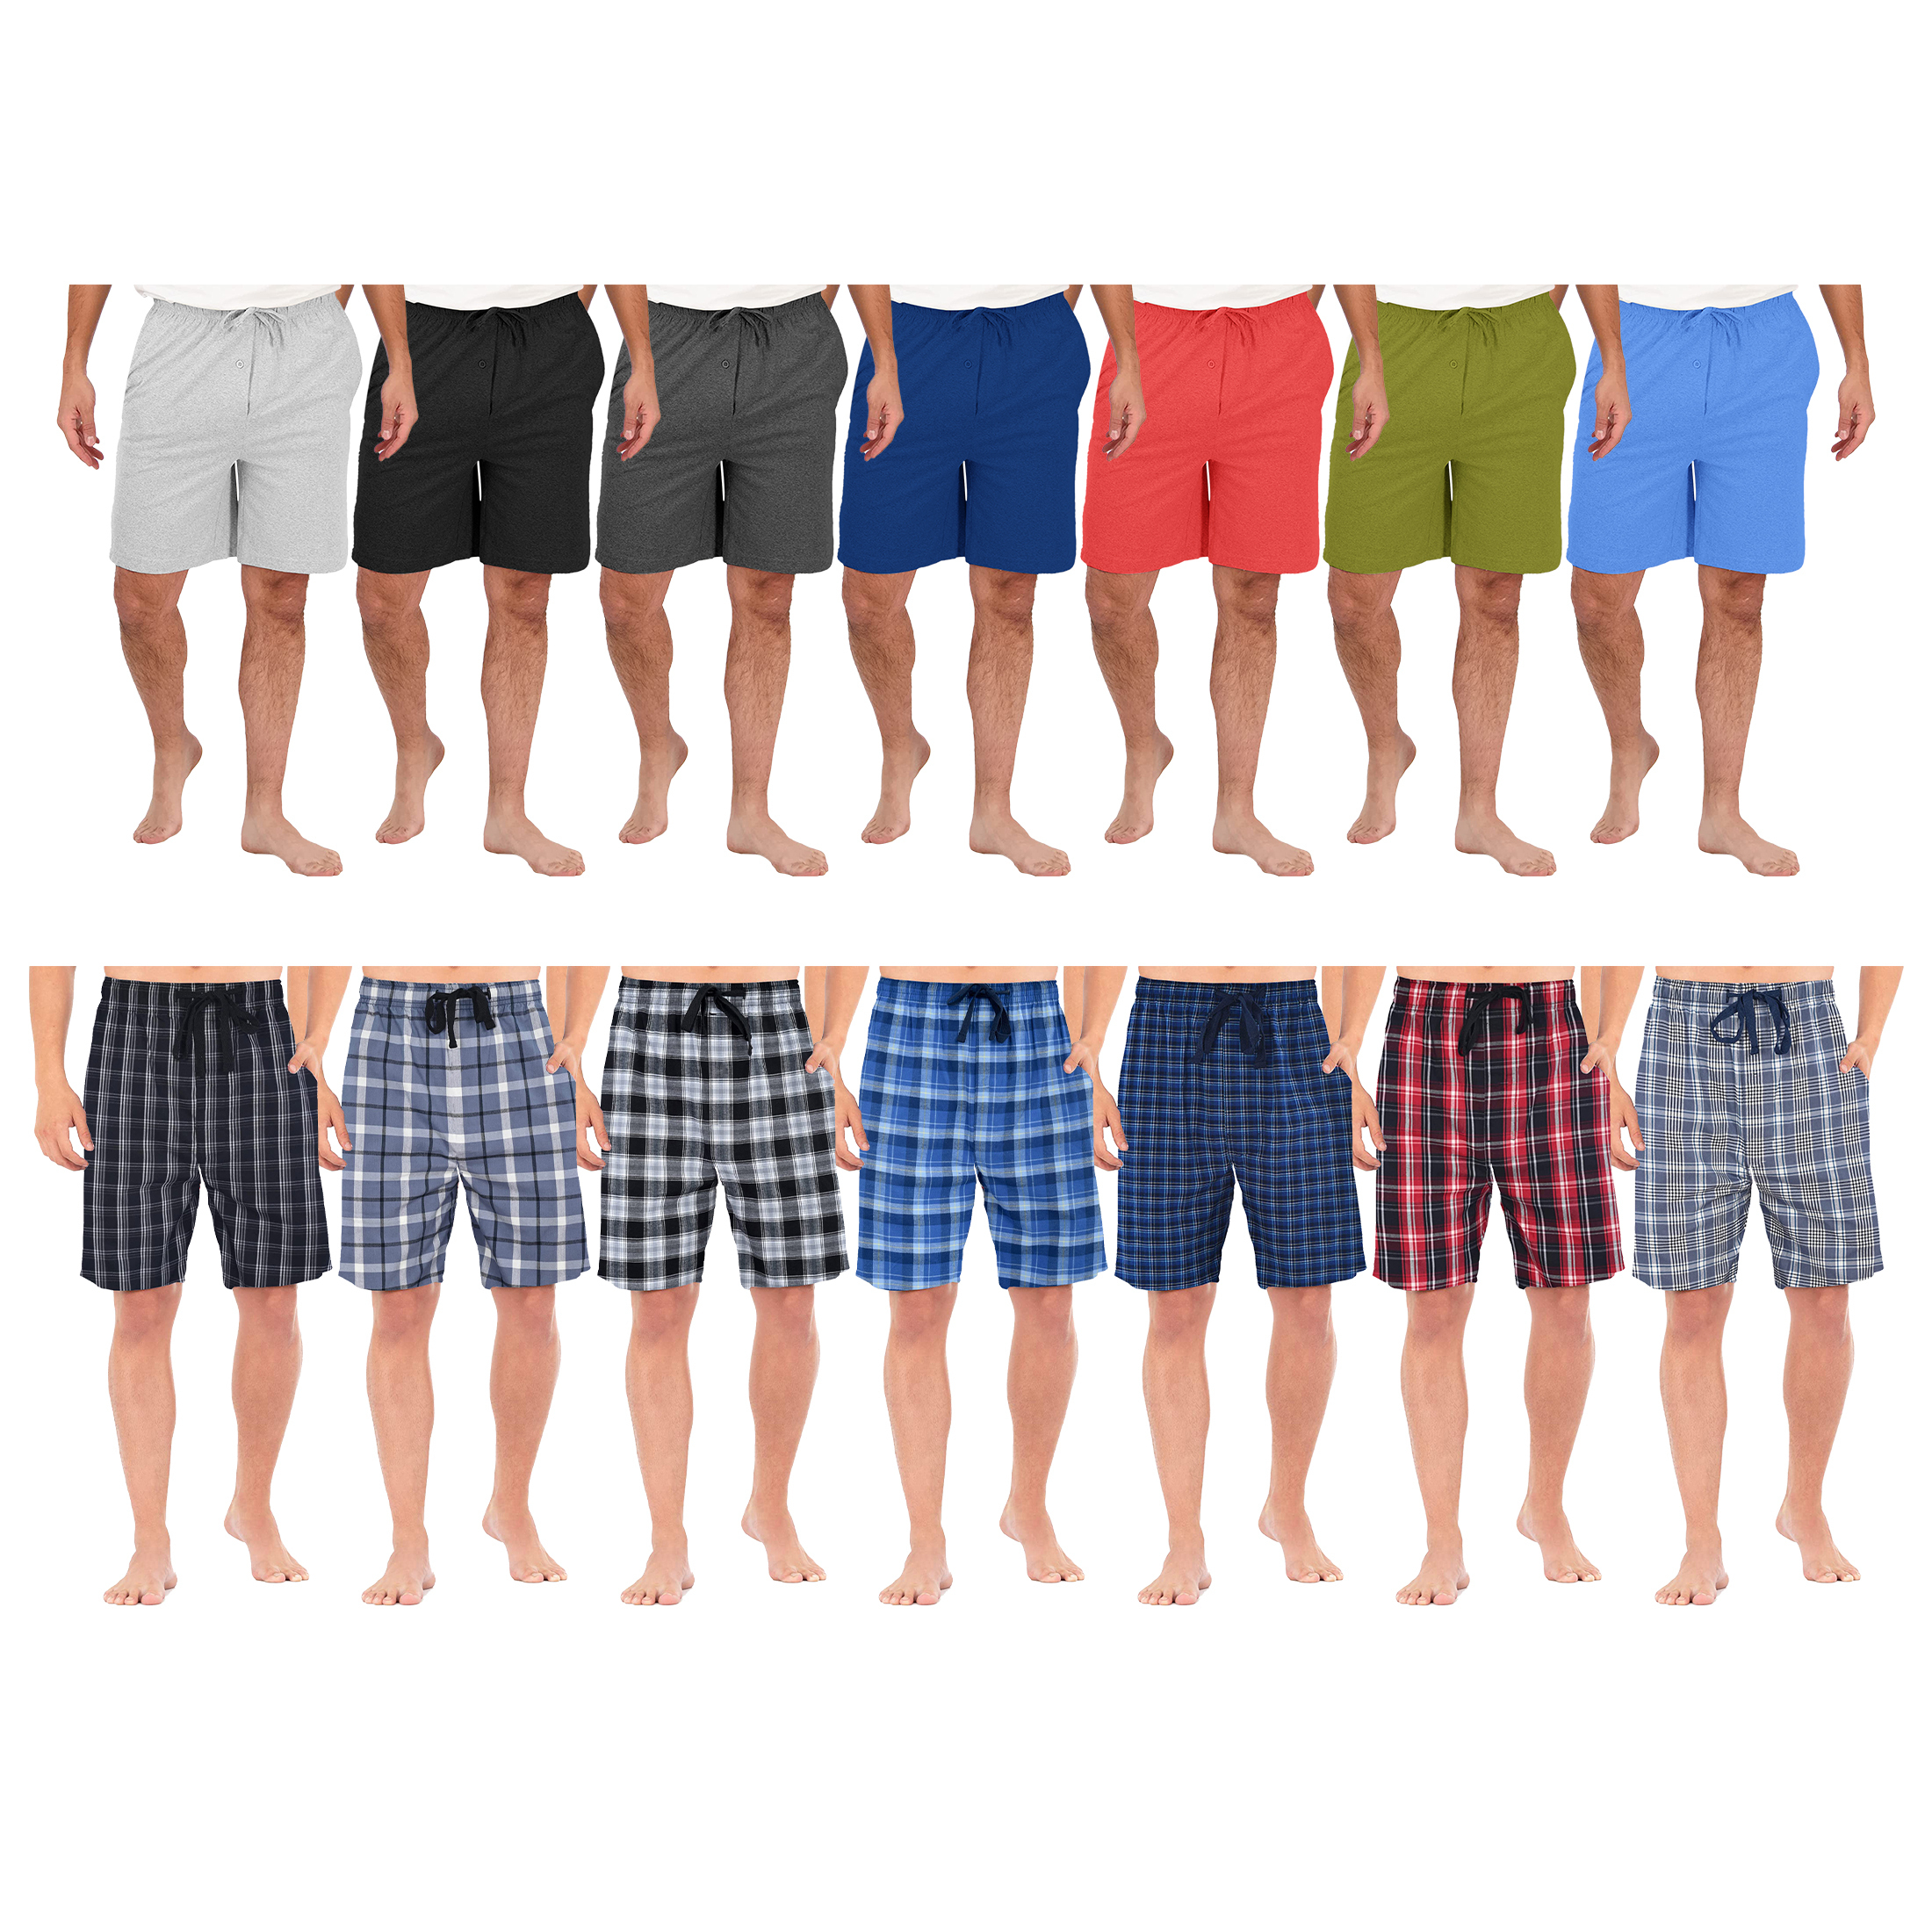 Multi-Pack: Men's Ultra-Soft Jersey Knit Sleep Lounge Pajama Shorts For Sleepwear - Plaid, 1 Pack, Small